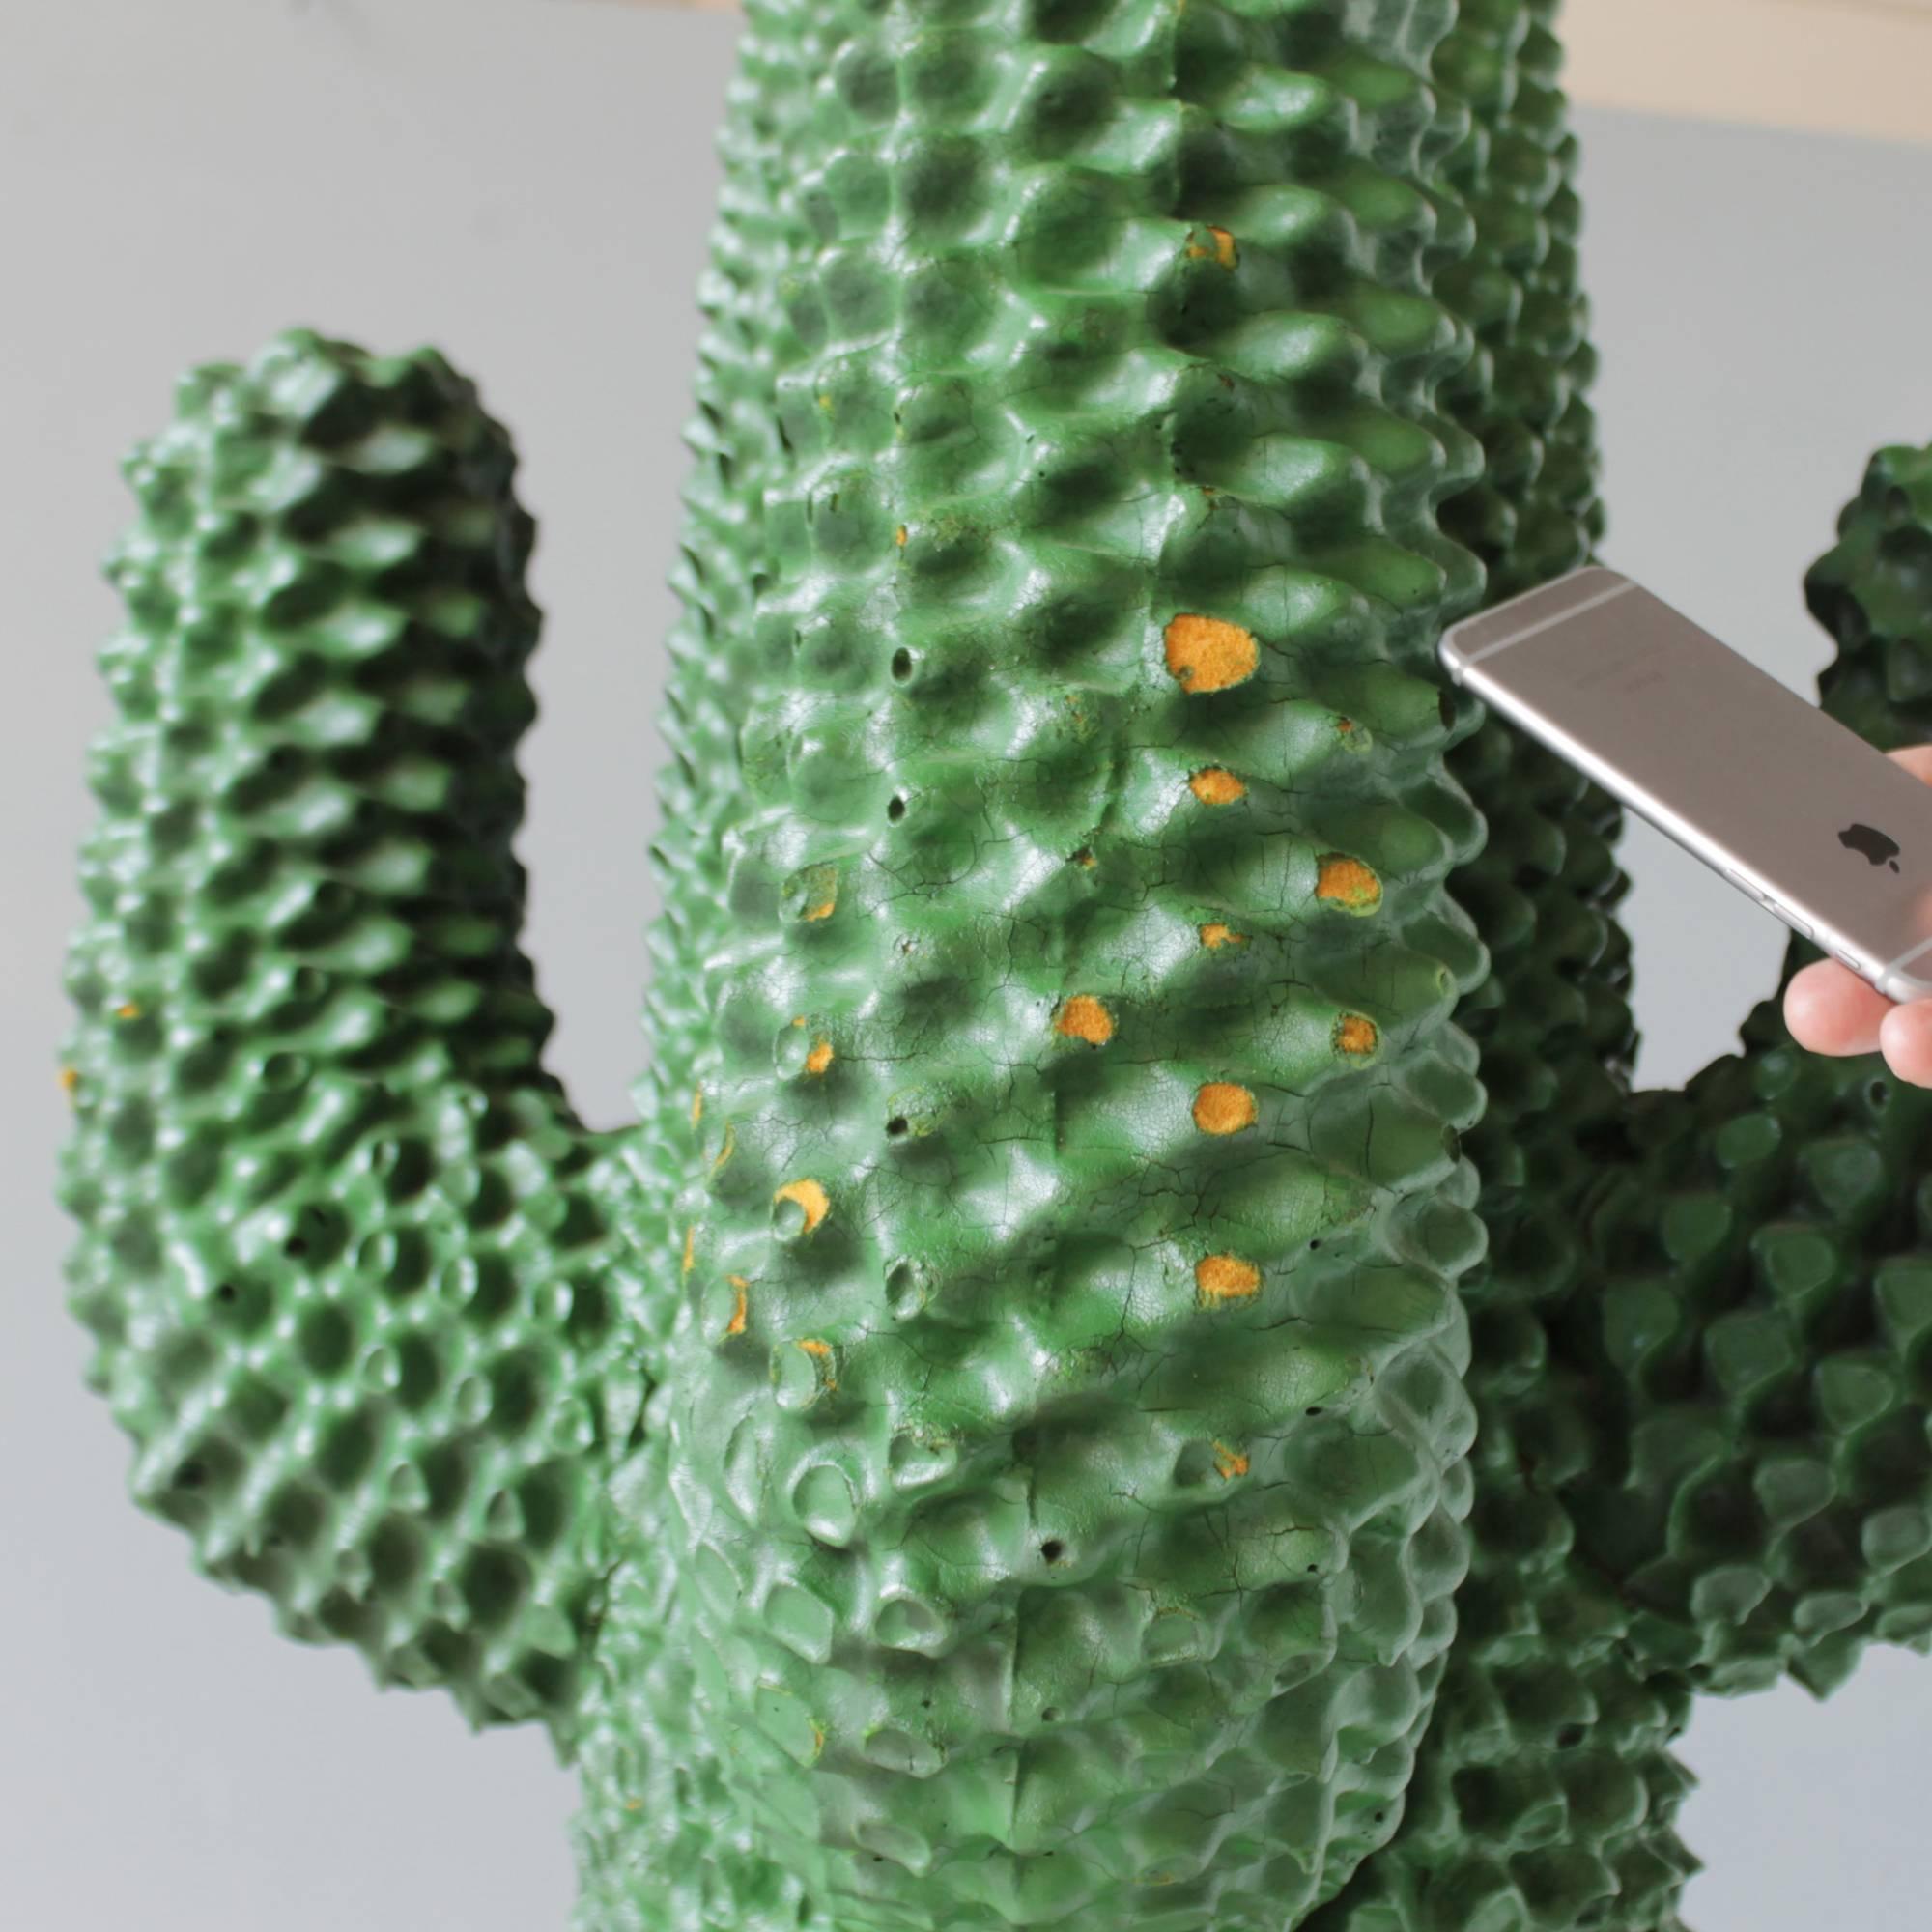 Italian Cactus by Guido Drocco and Franco Mello for Gufram